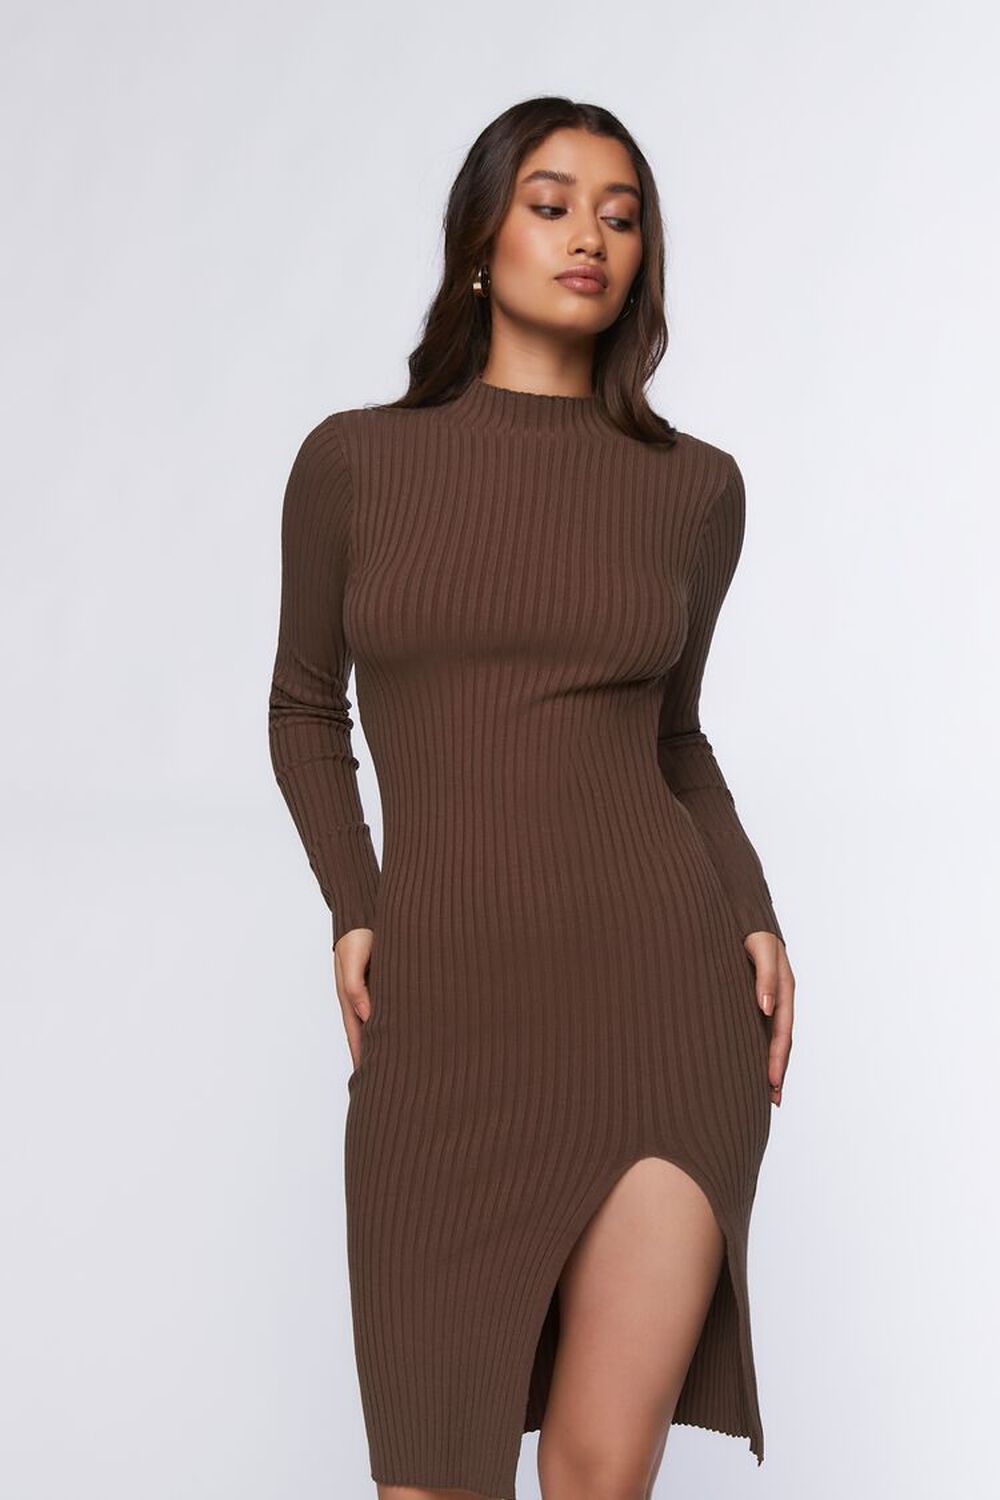 WALNUT Ribbed Knee-Length Sweater Dress, image 1